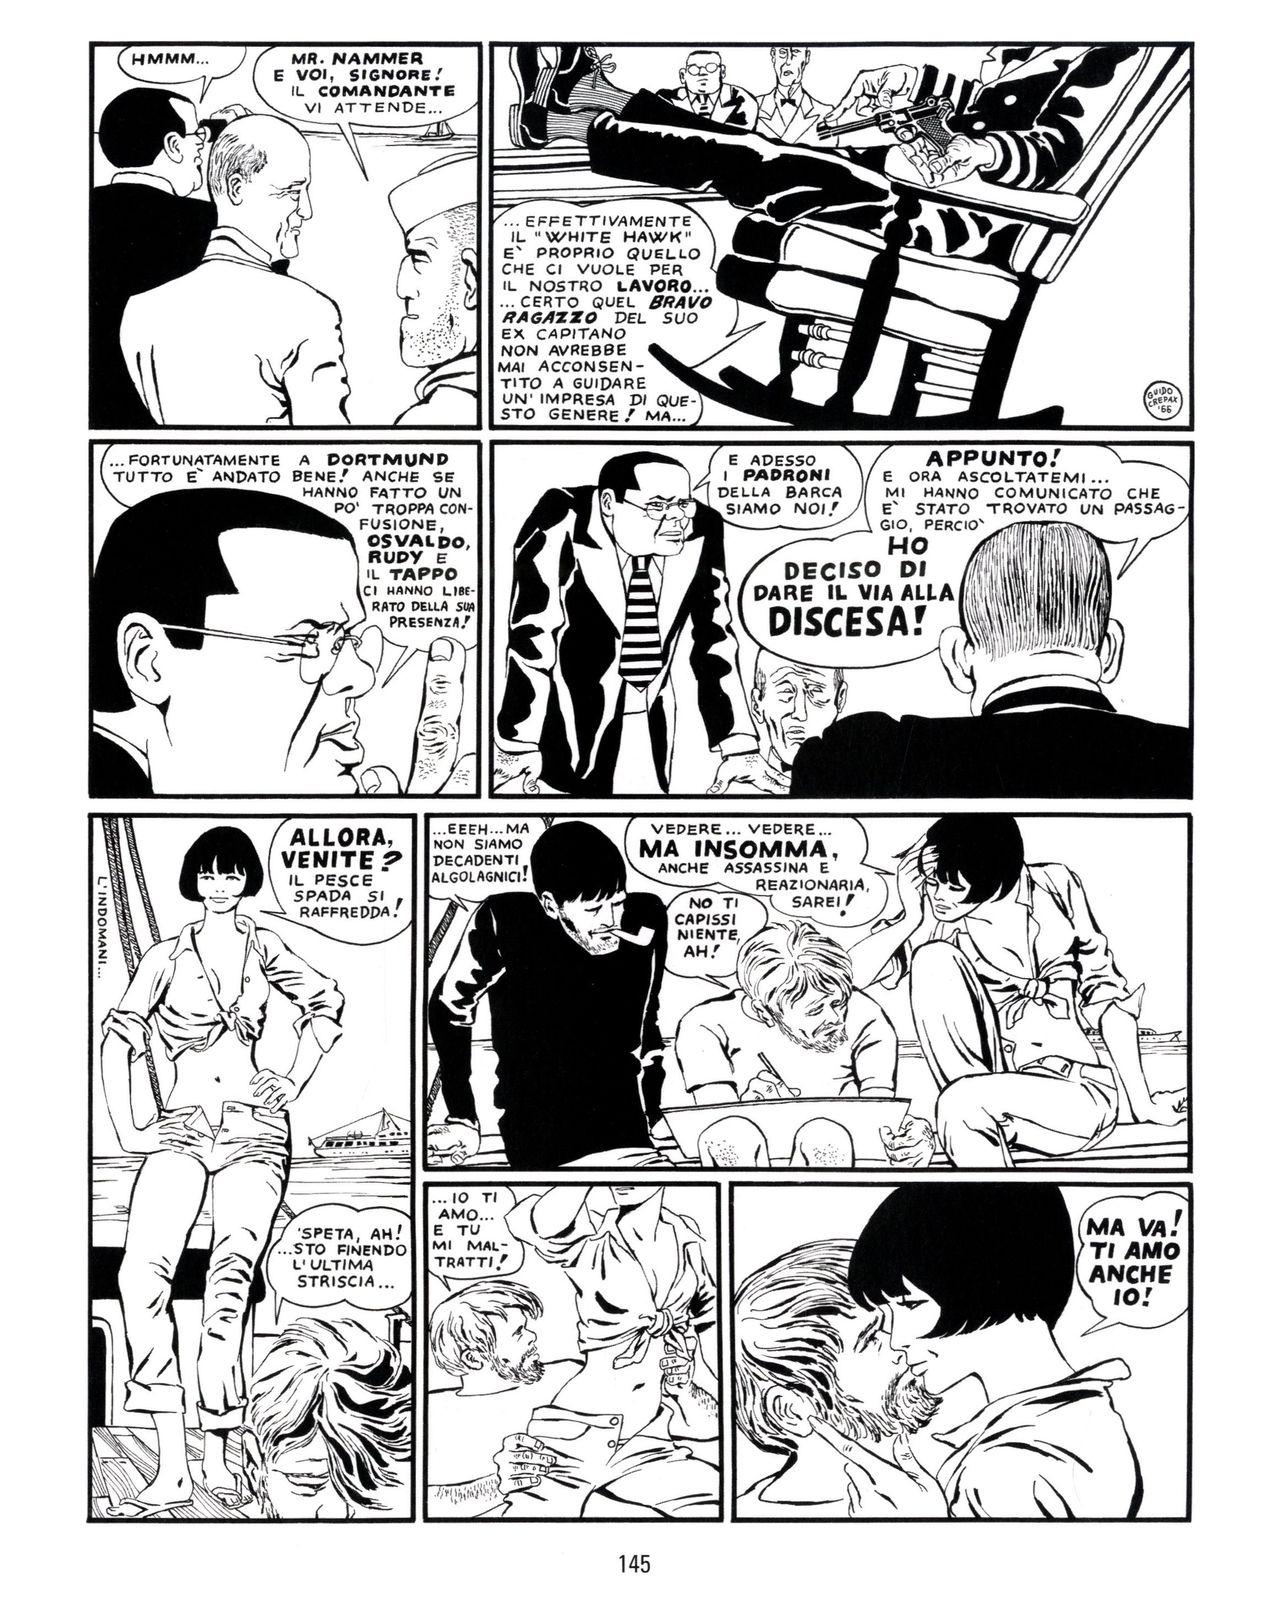 [Guido Crepax] Erotica Fumetti #25 : L'ascesa dei sotterranei : I cavalieri ciechi [Italian] 146